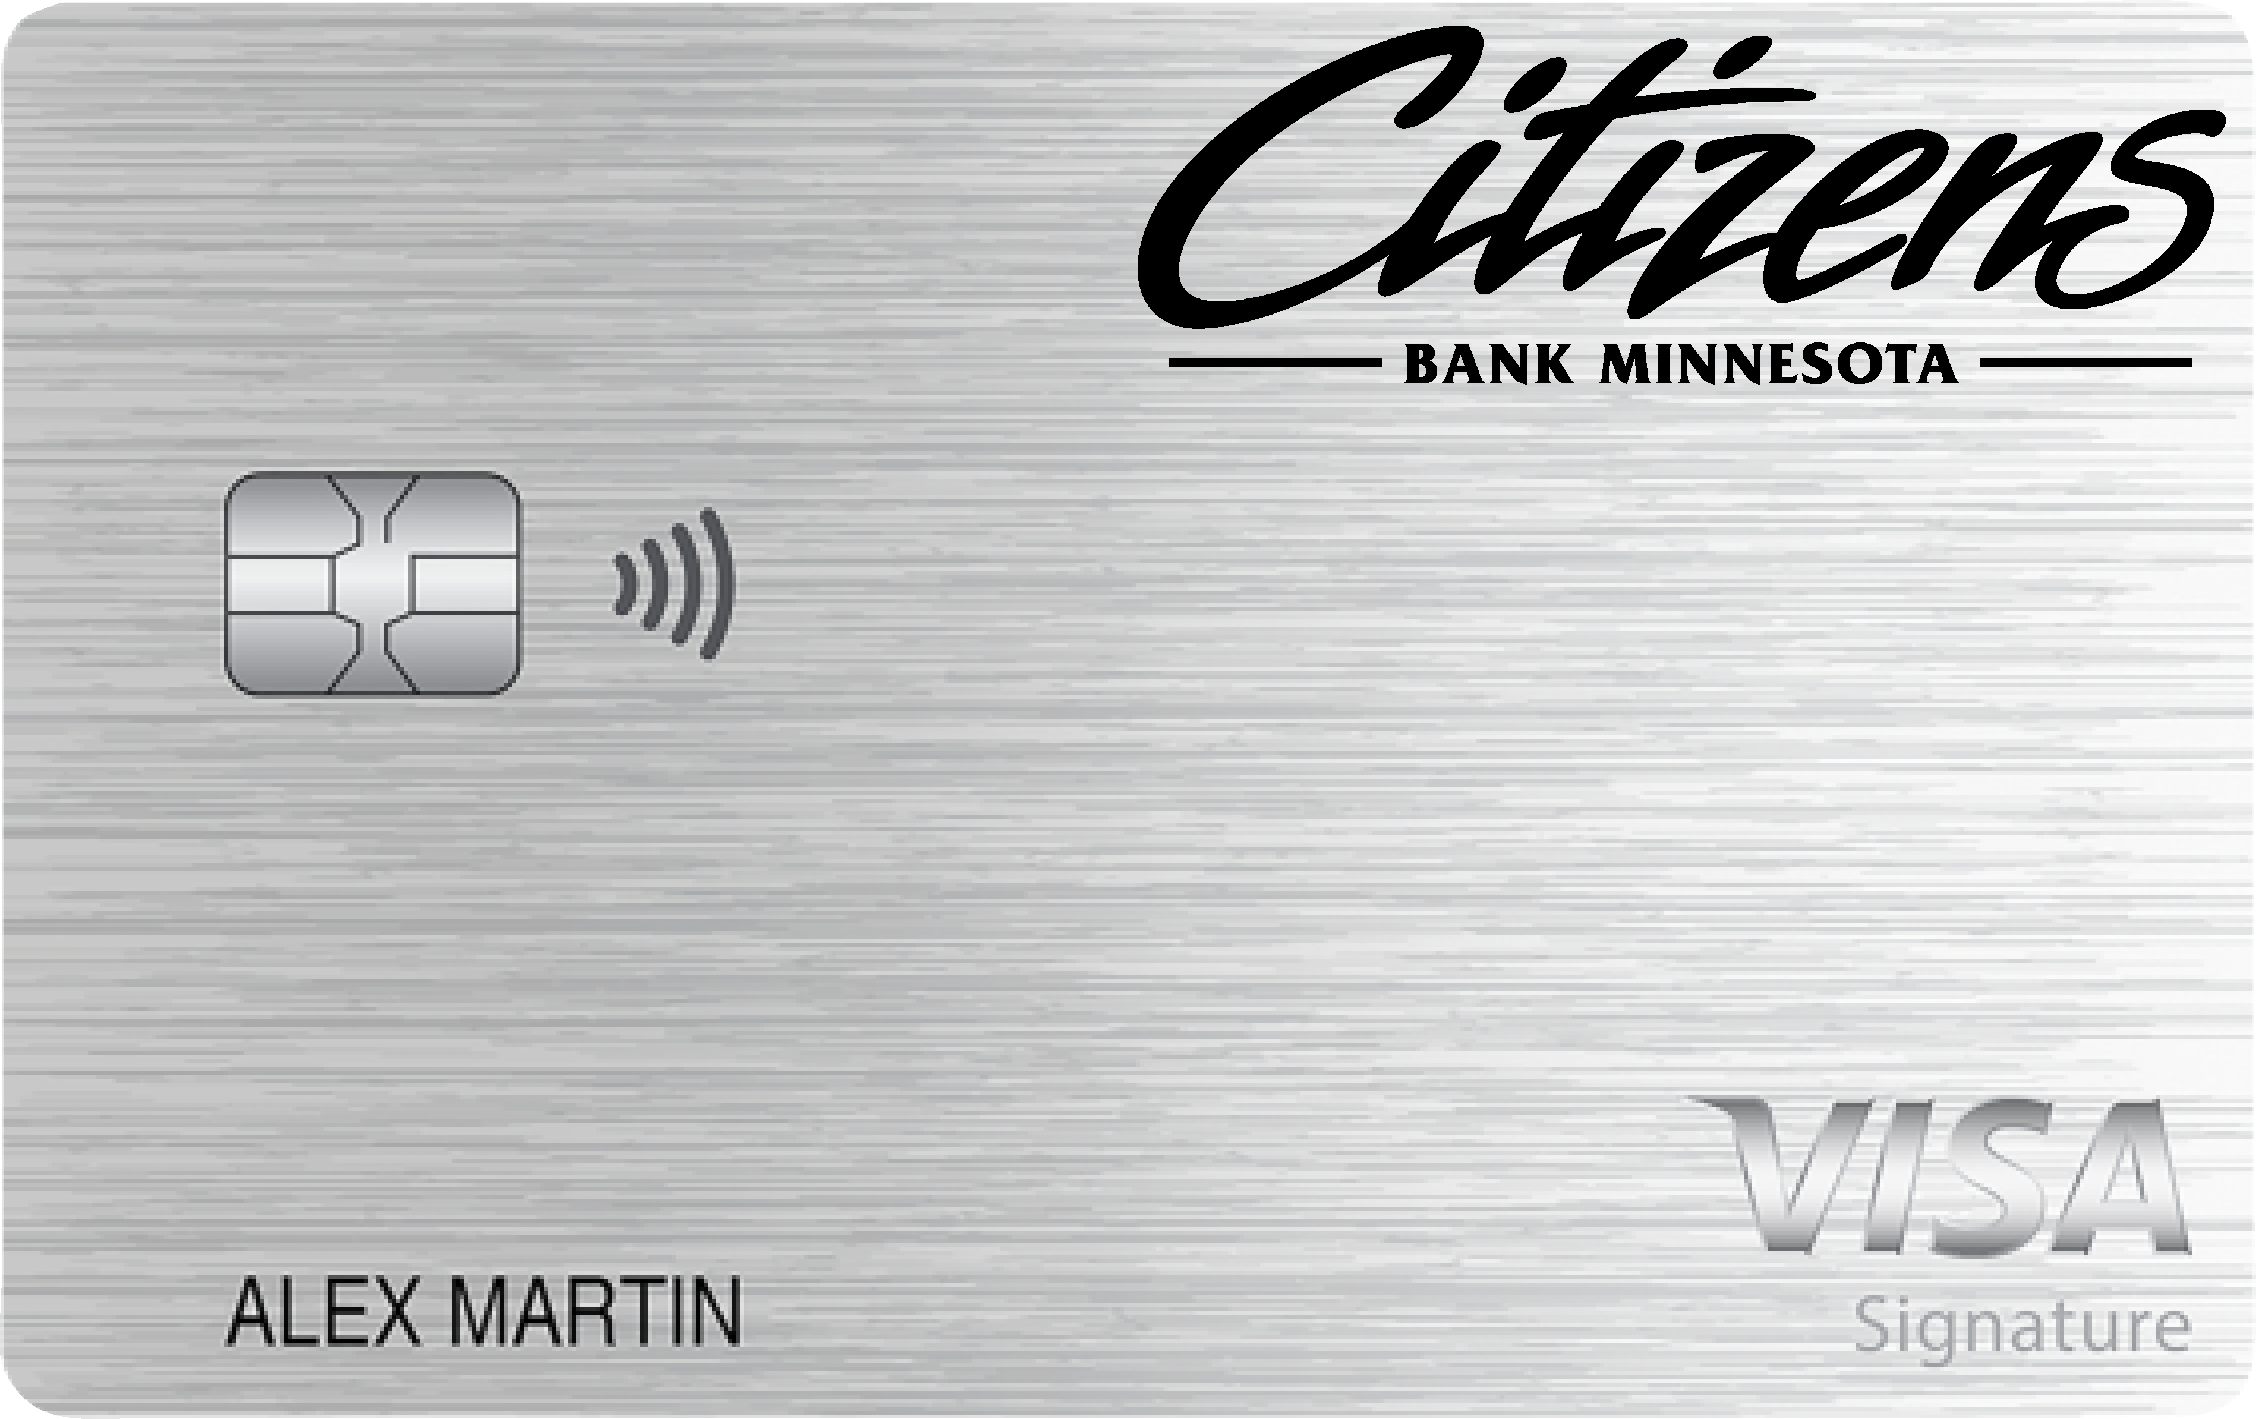 Citizens Bank Minnesota